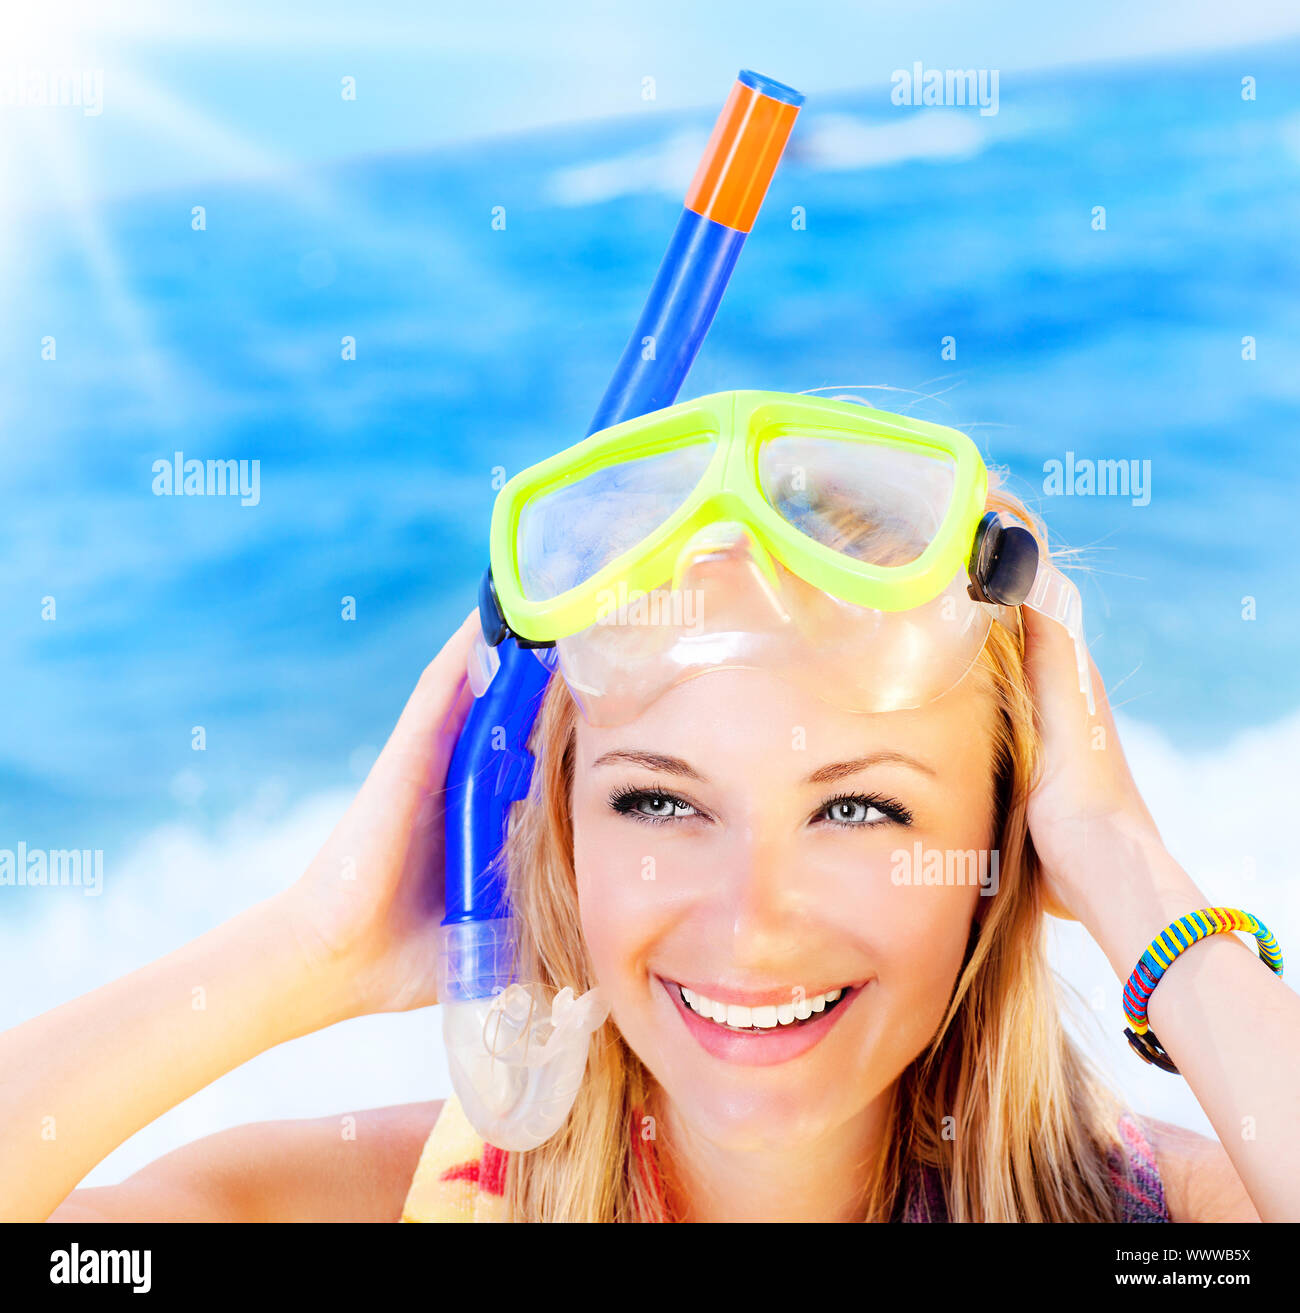 Pretty Teen Girl Closeup Portrait On The Beach Summer Fun Outdoor Woman Wearing Snorkeling